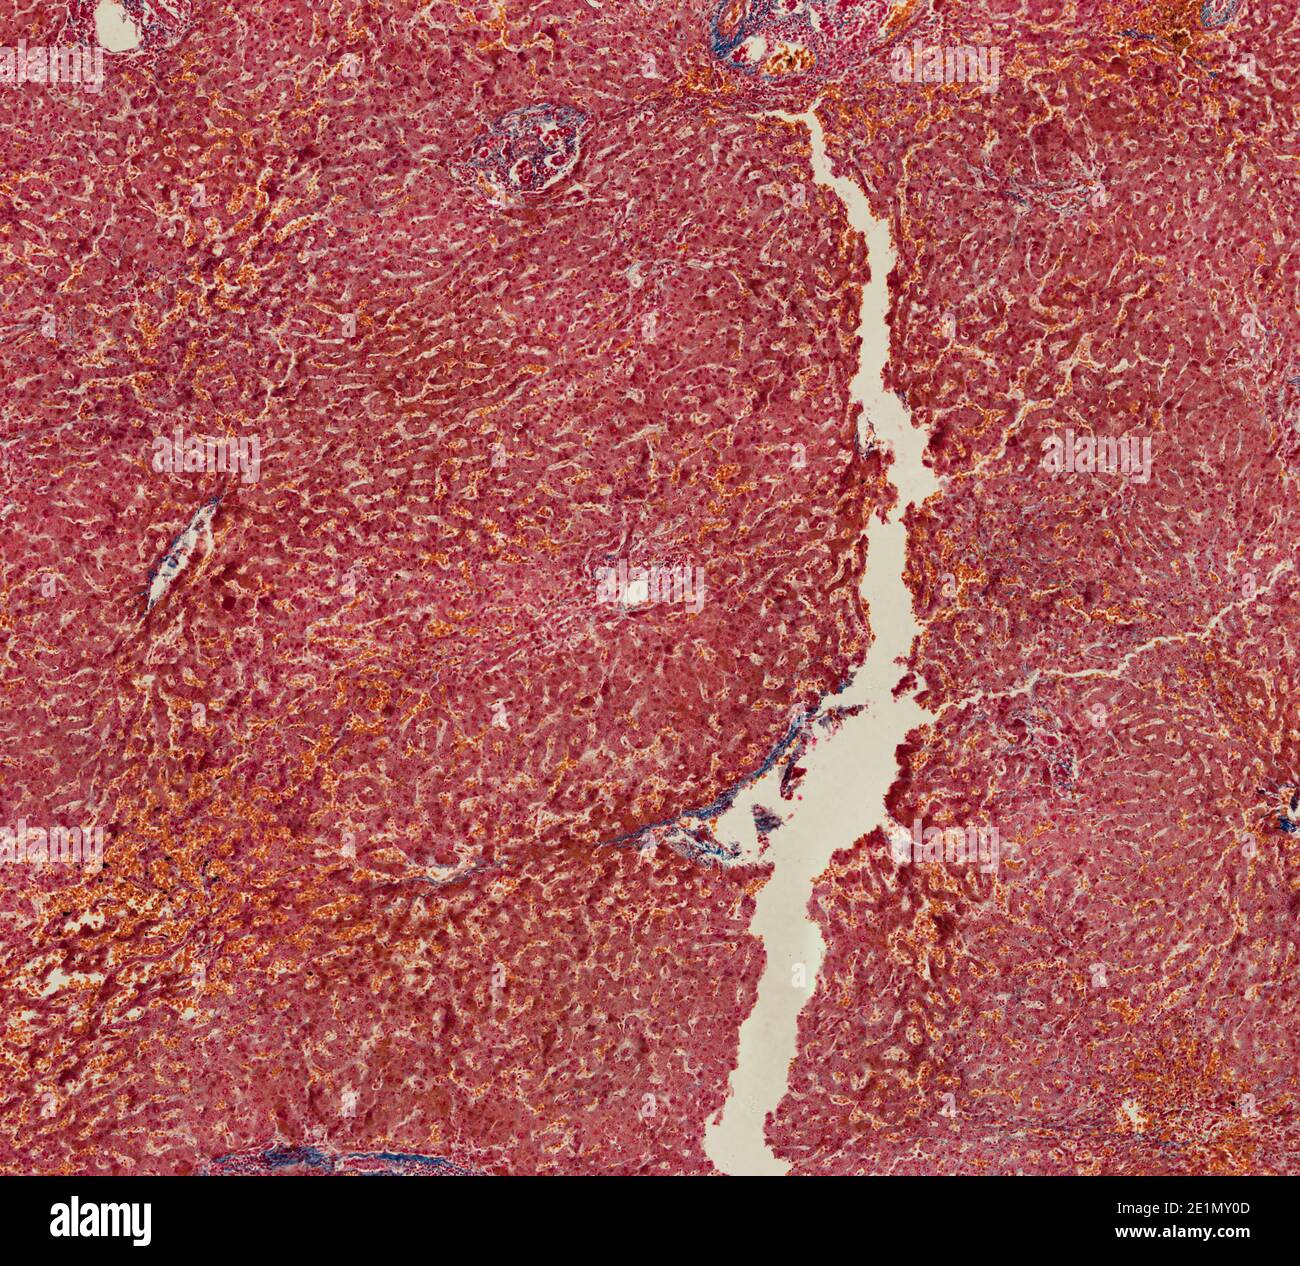 Tejido Muscular Microscopio Fotos e Imágenes de stock - Alamy